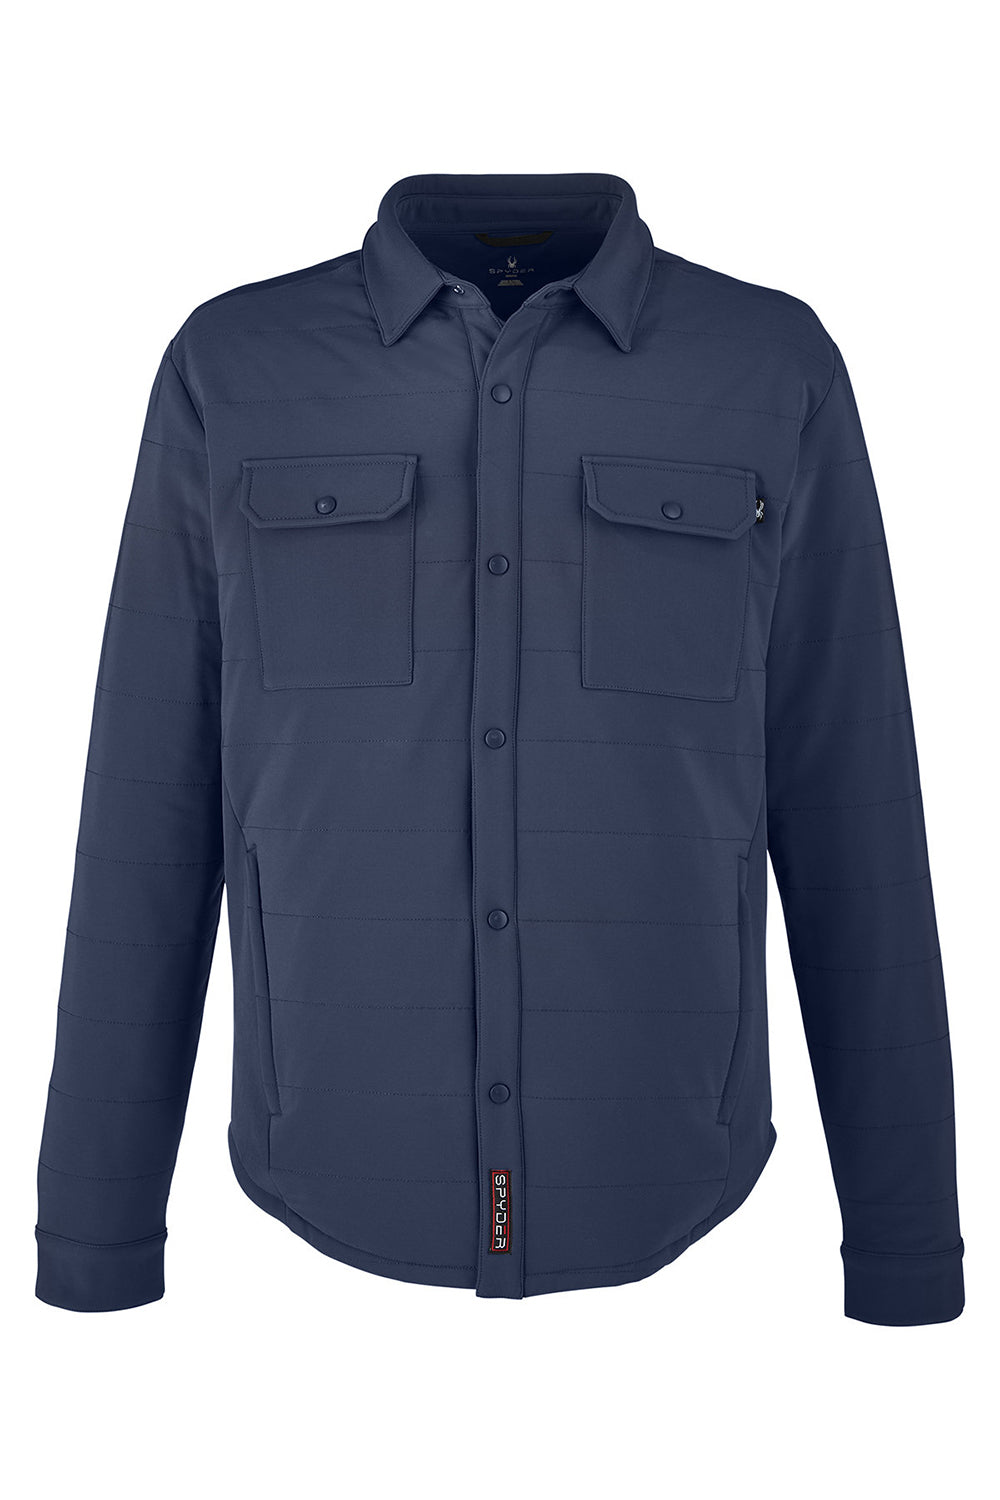 Spyder S17030 Mens Transit Full Snap Down Shirt Jacket Frontier Blue Flat Front